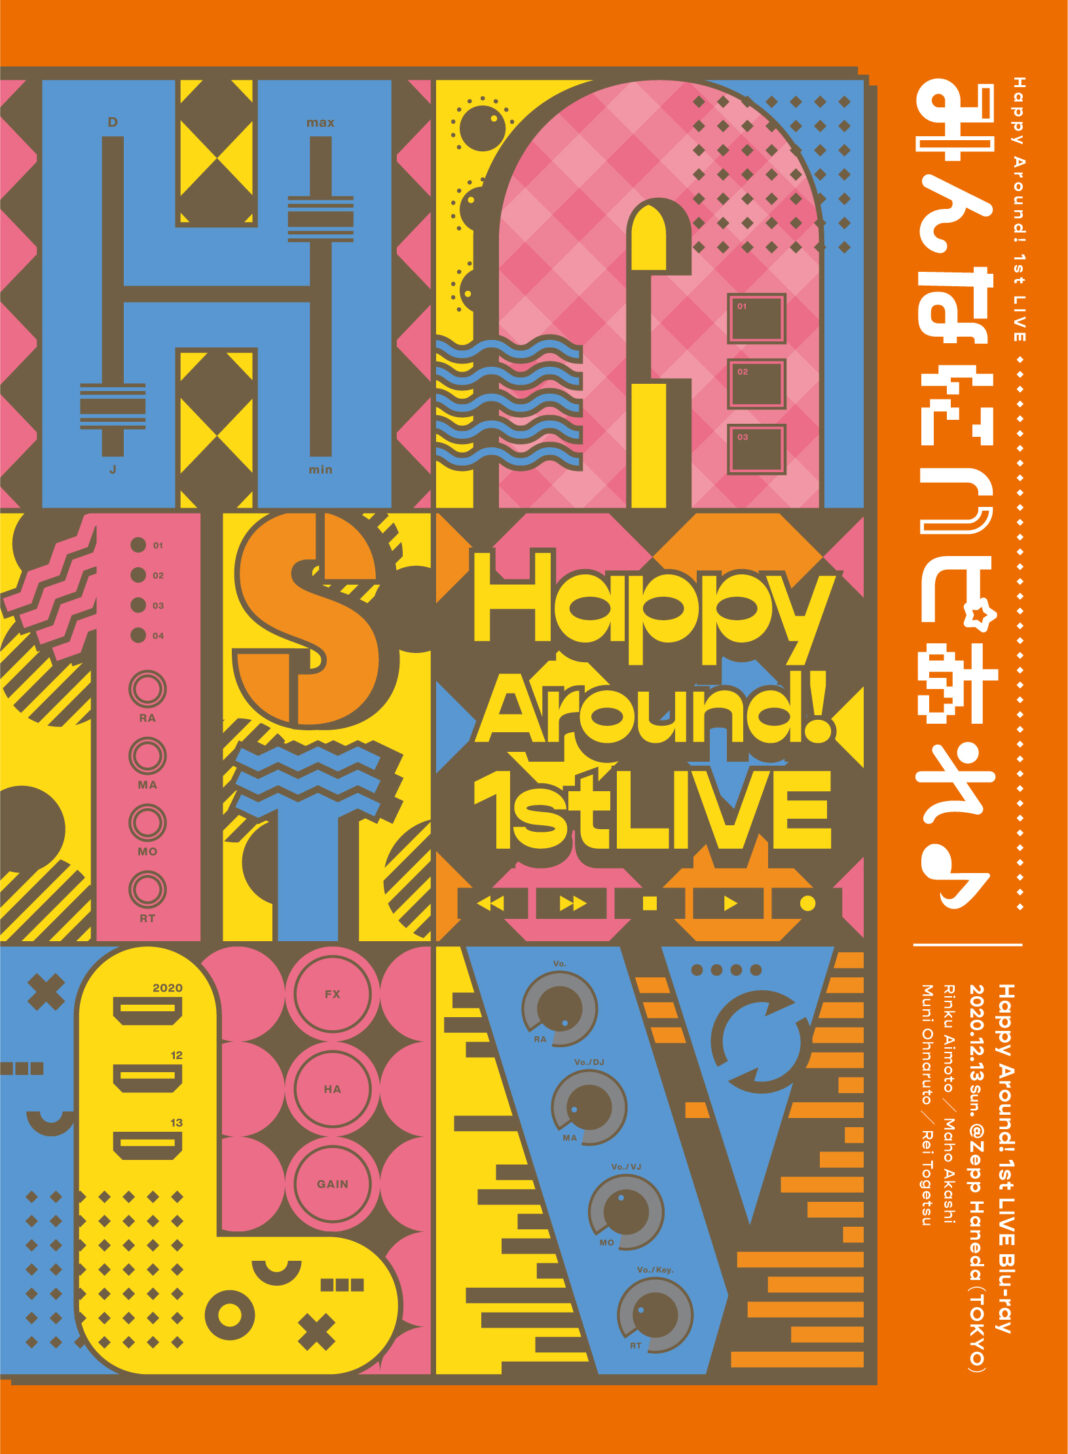 「Happy Around! 1st LIVE みんなにハピあれ♪」12/20付オリコン週間ミュージックBlu-ray Discランキング9位獲得！のメイン画像